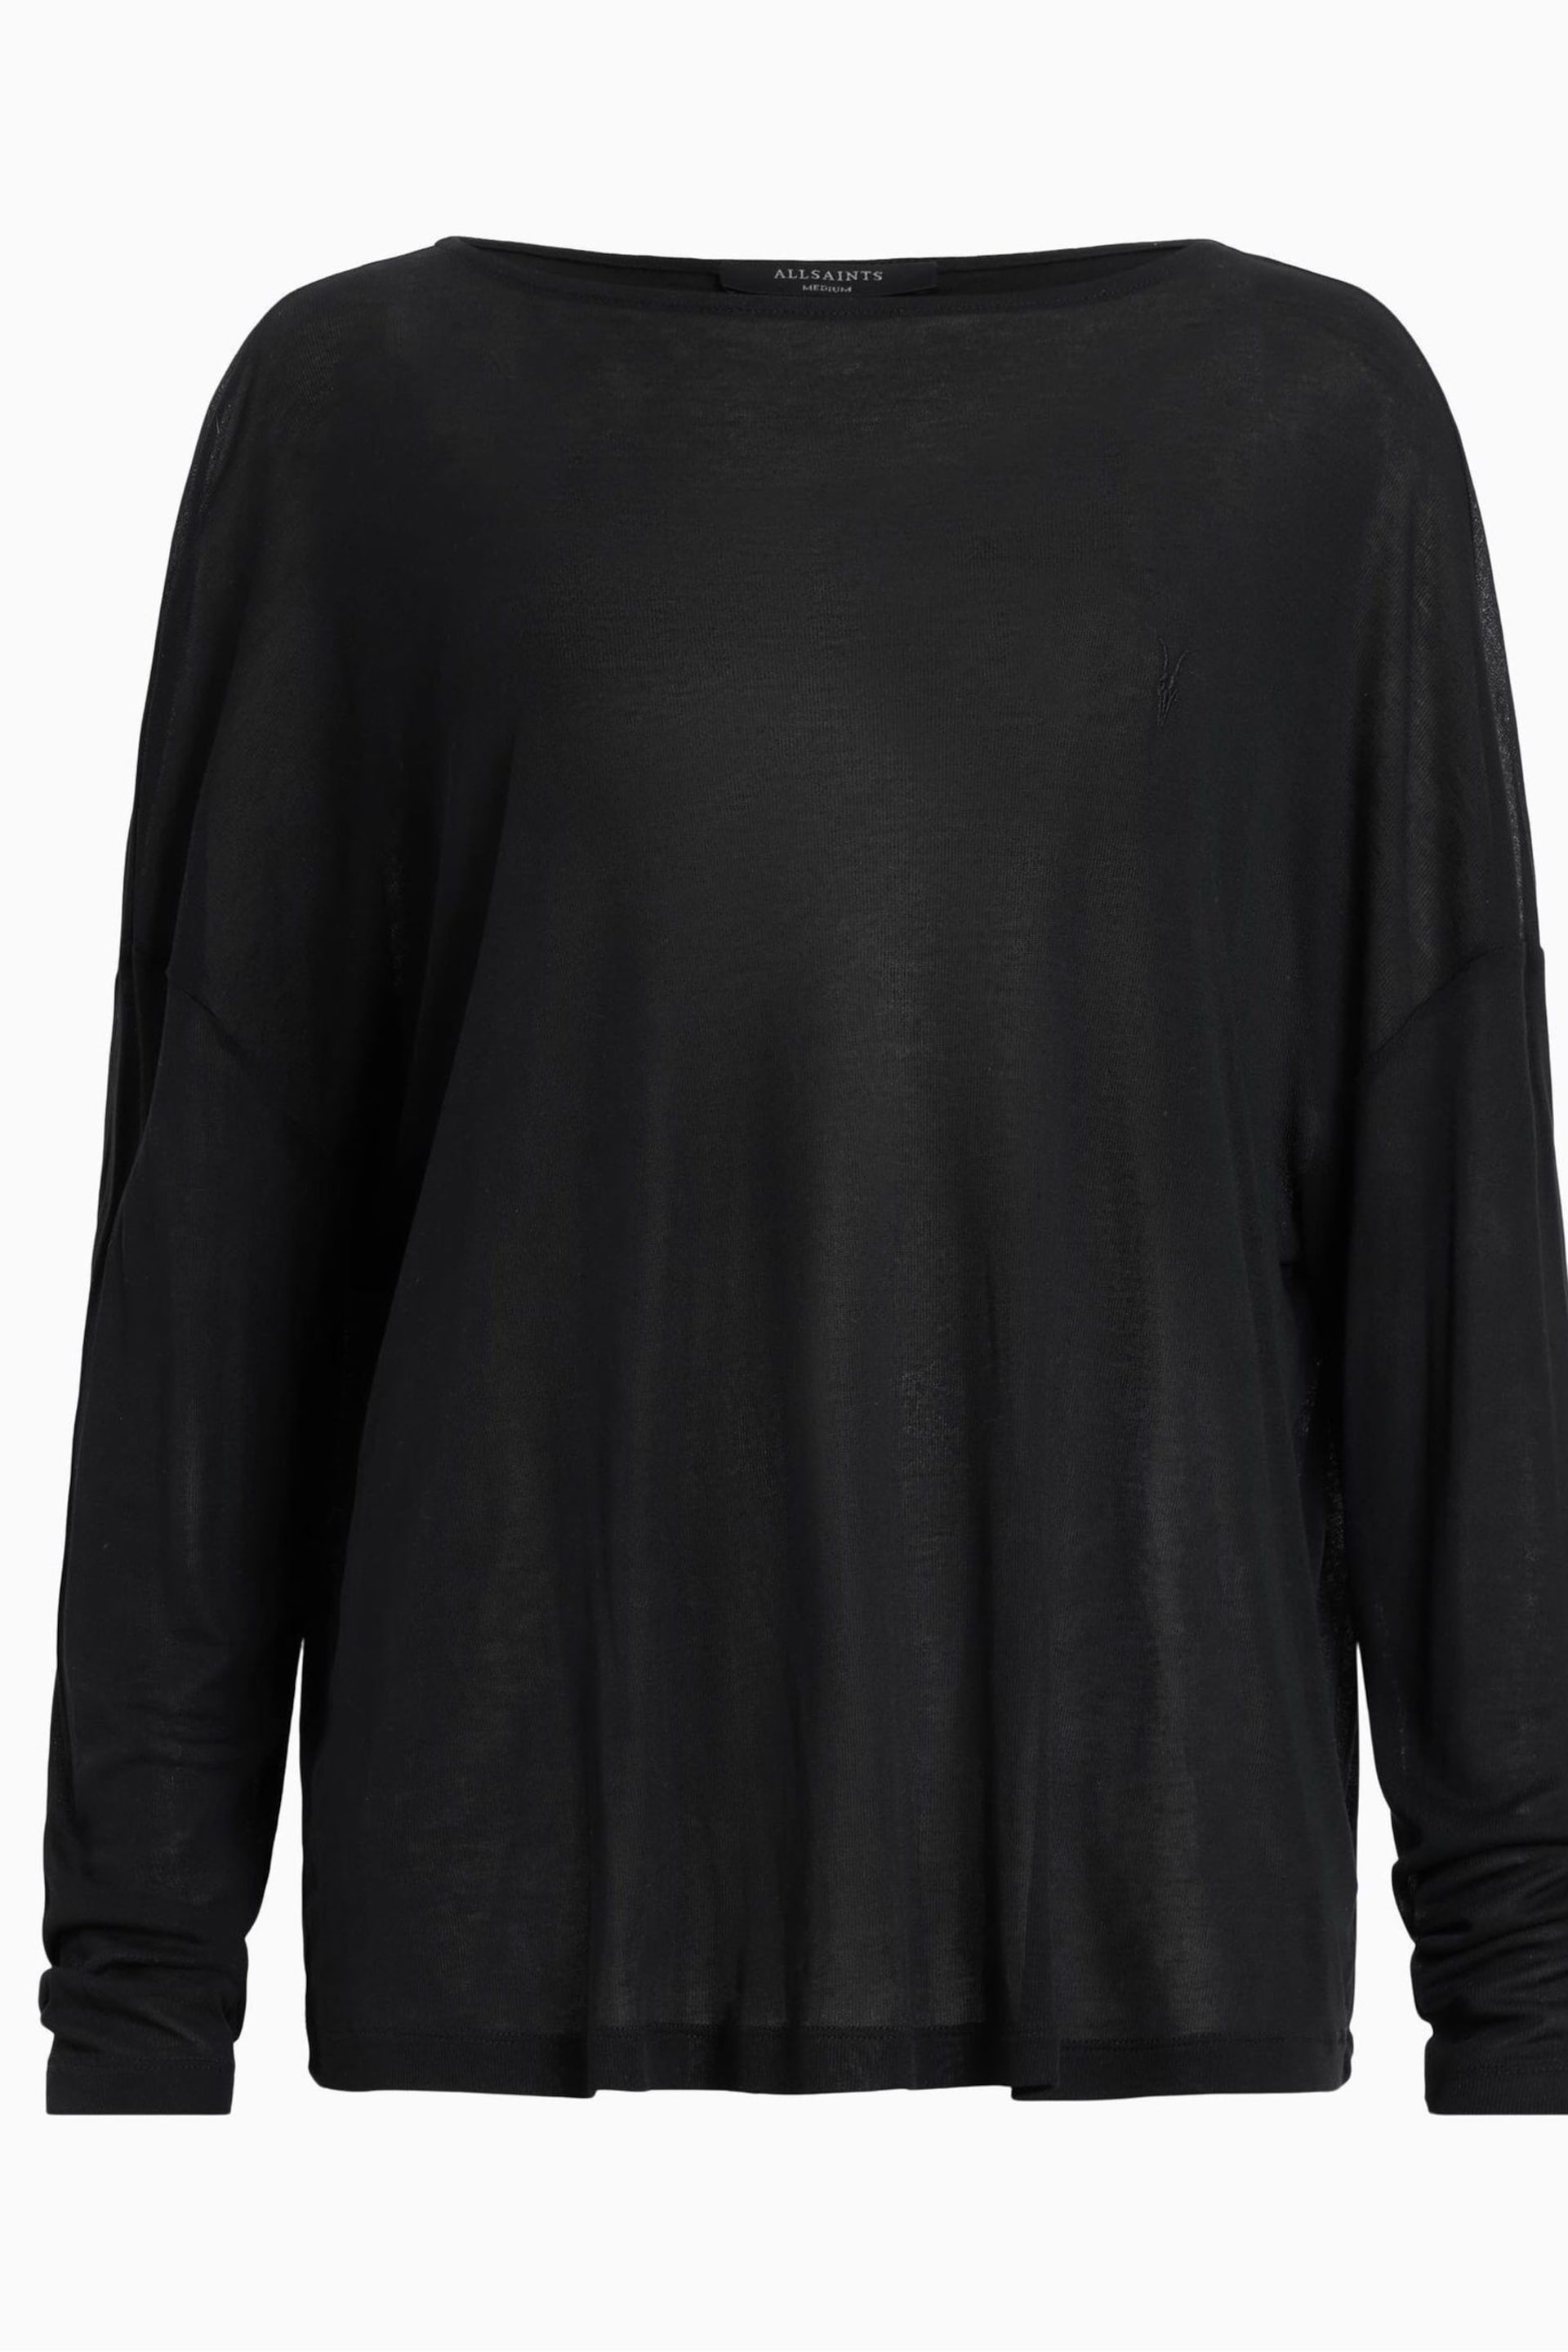 AllSaints Black Rita Francesco T-Shirt - Image 6 of 6